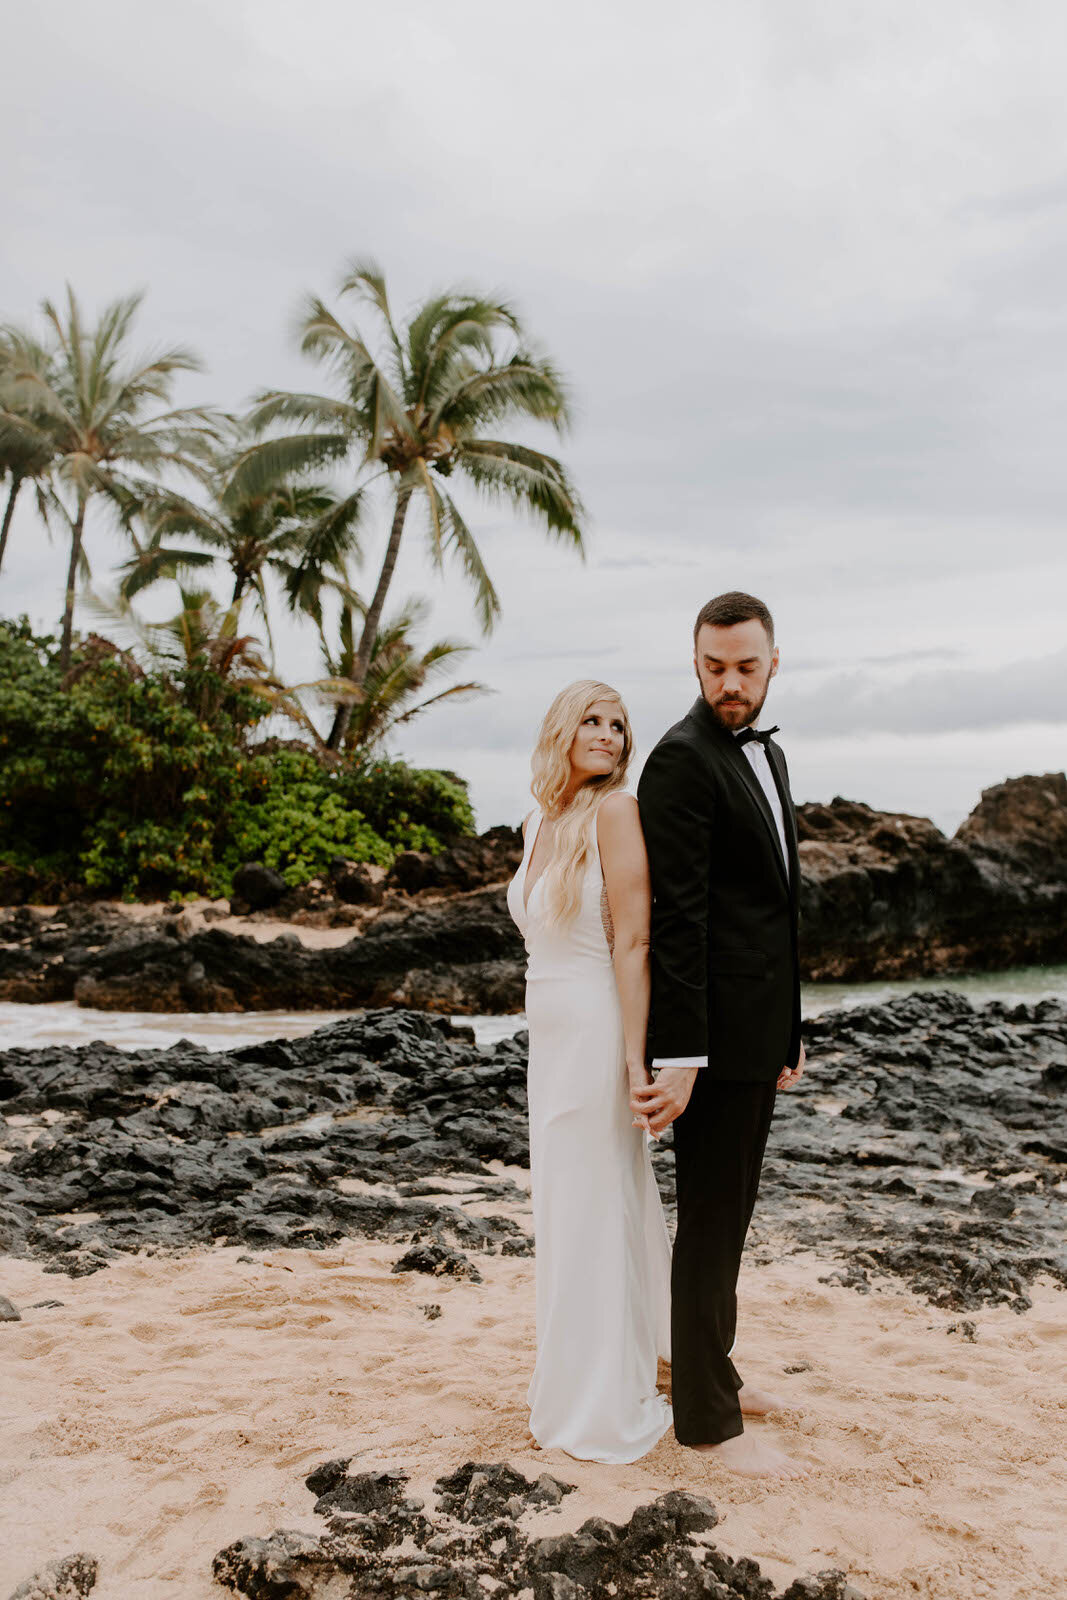 Brianna-Broyles-Photography-Fairmont-Kea-Lani-Wedding-Maui-Photographer-63.jpg